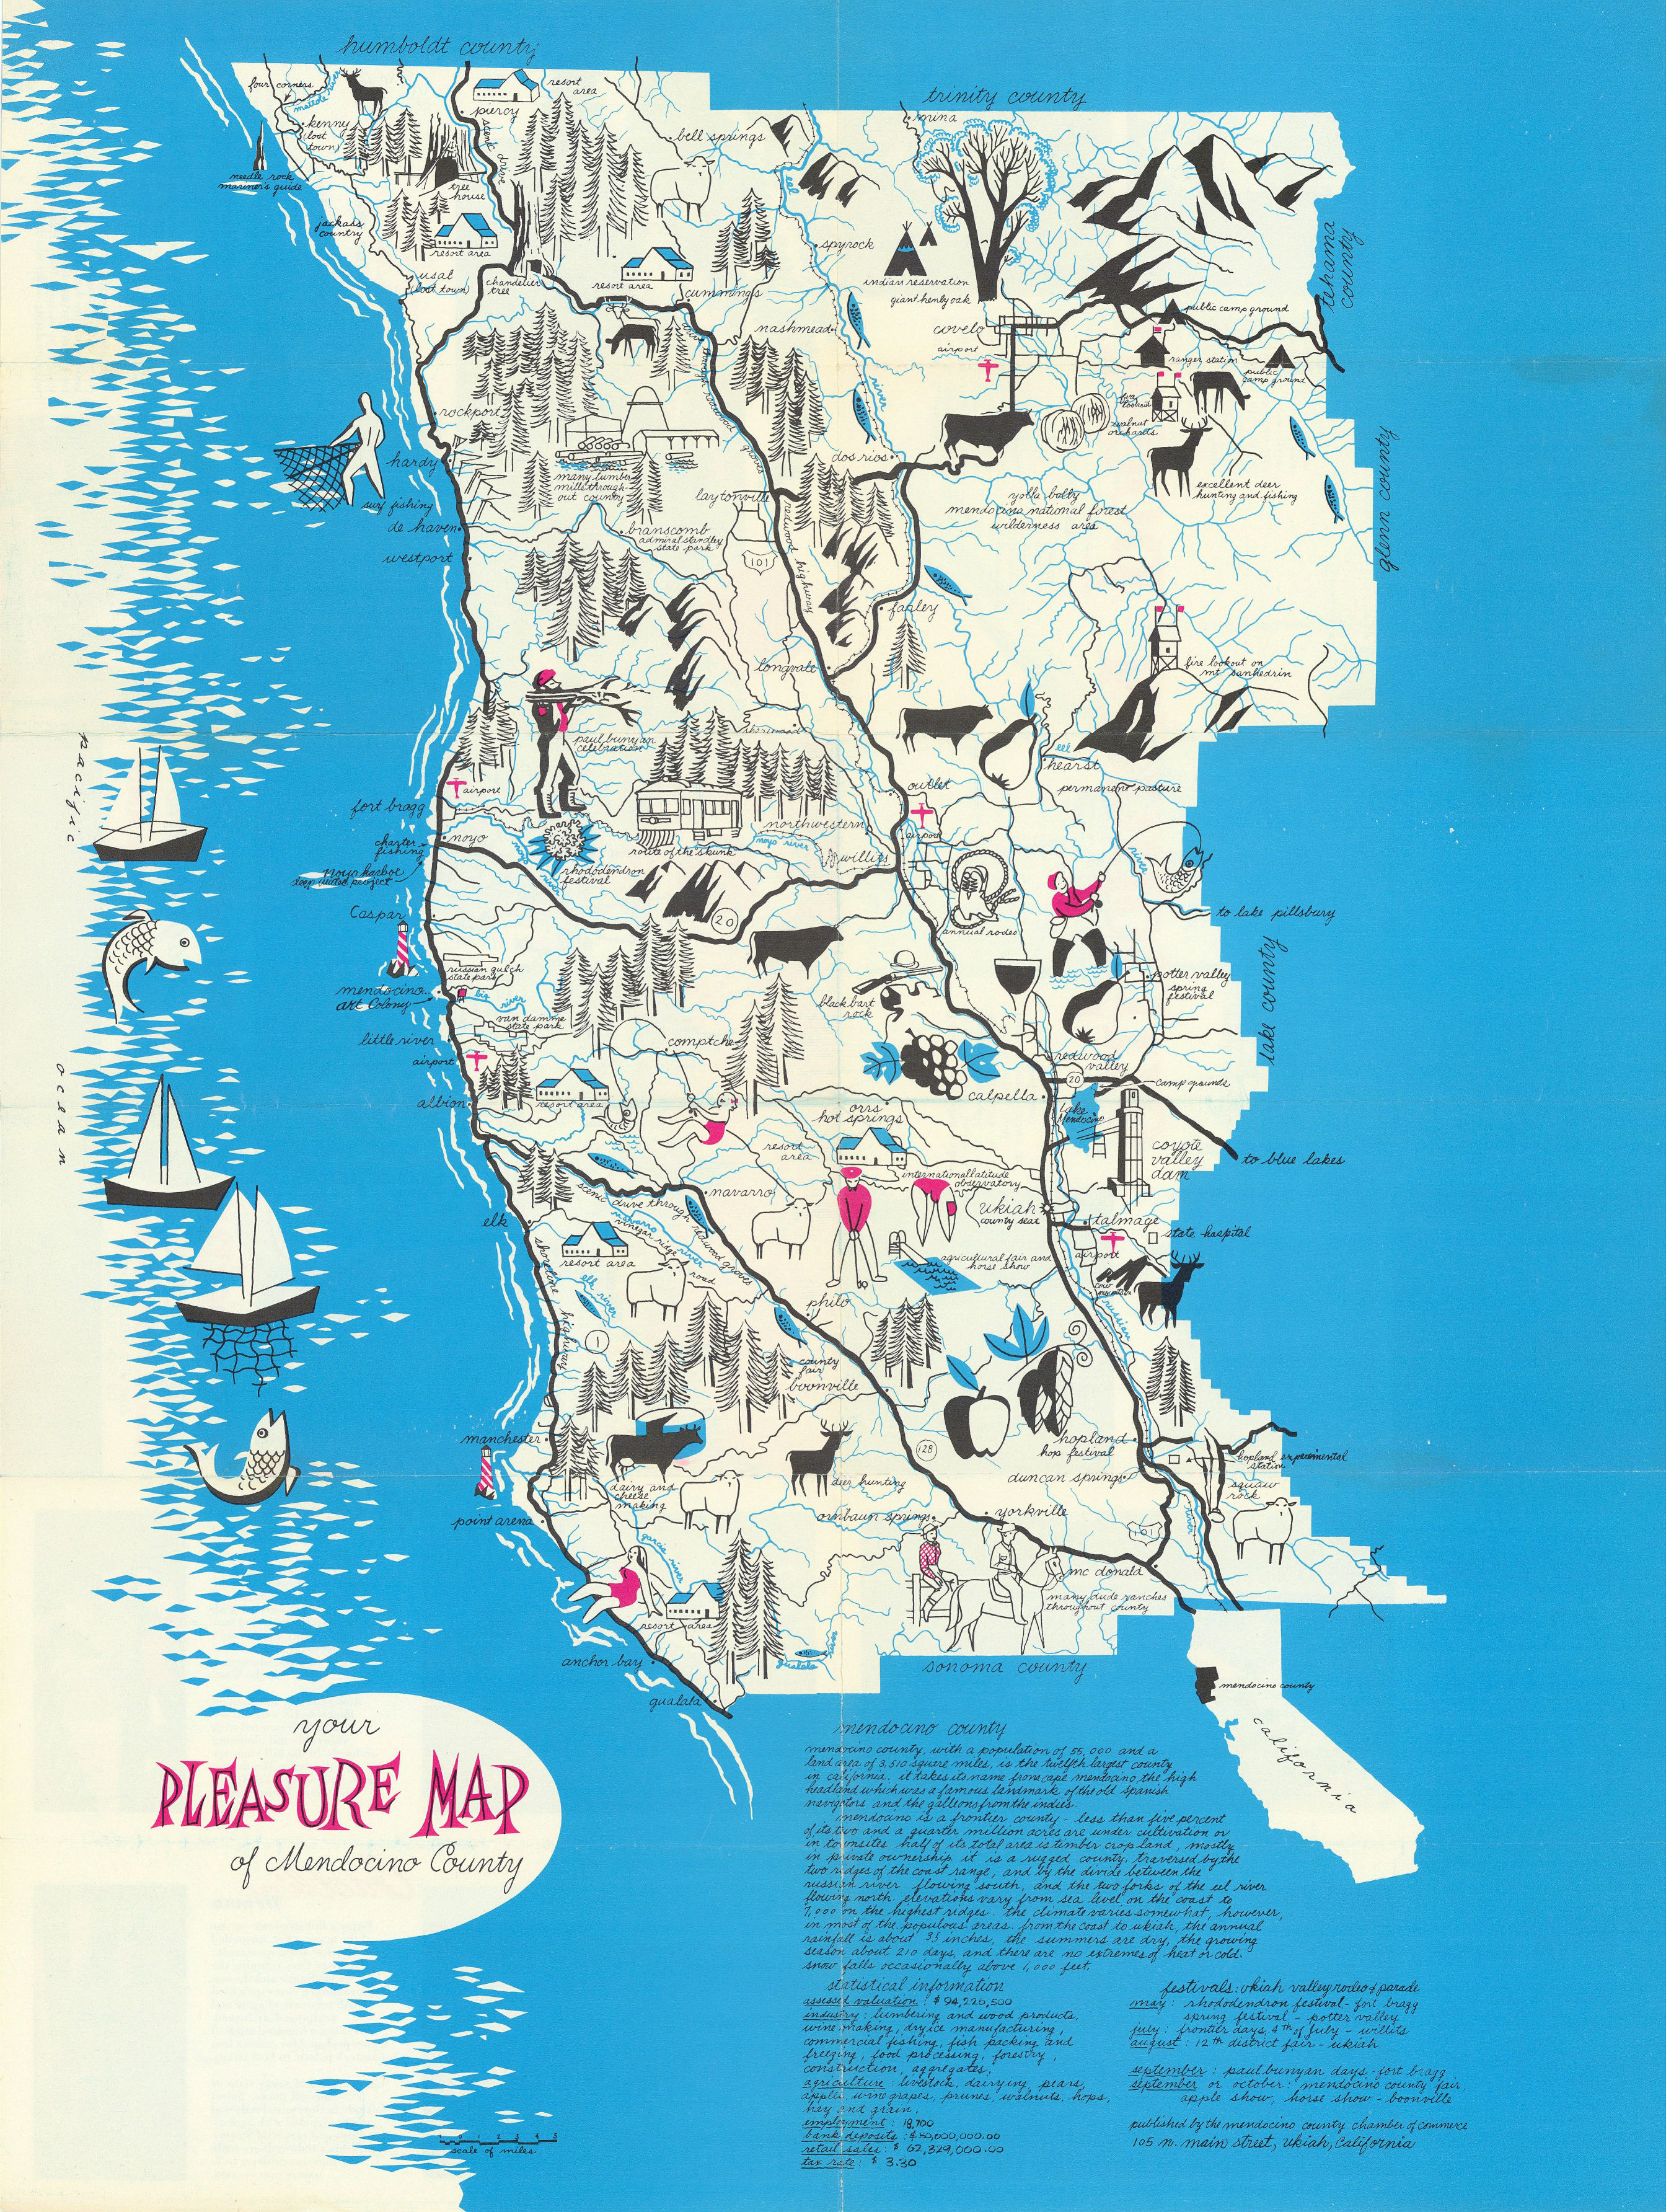 Pictorial tourist "Pleasure map of Mendocino County", California. 24"x18" c1960